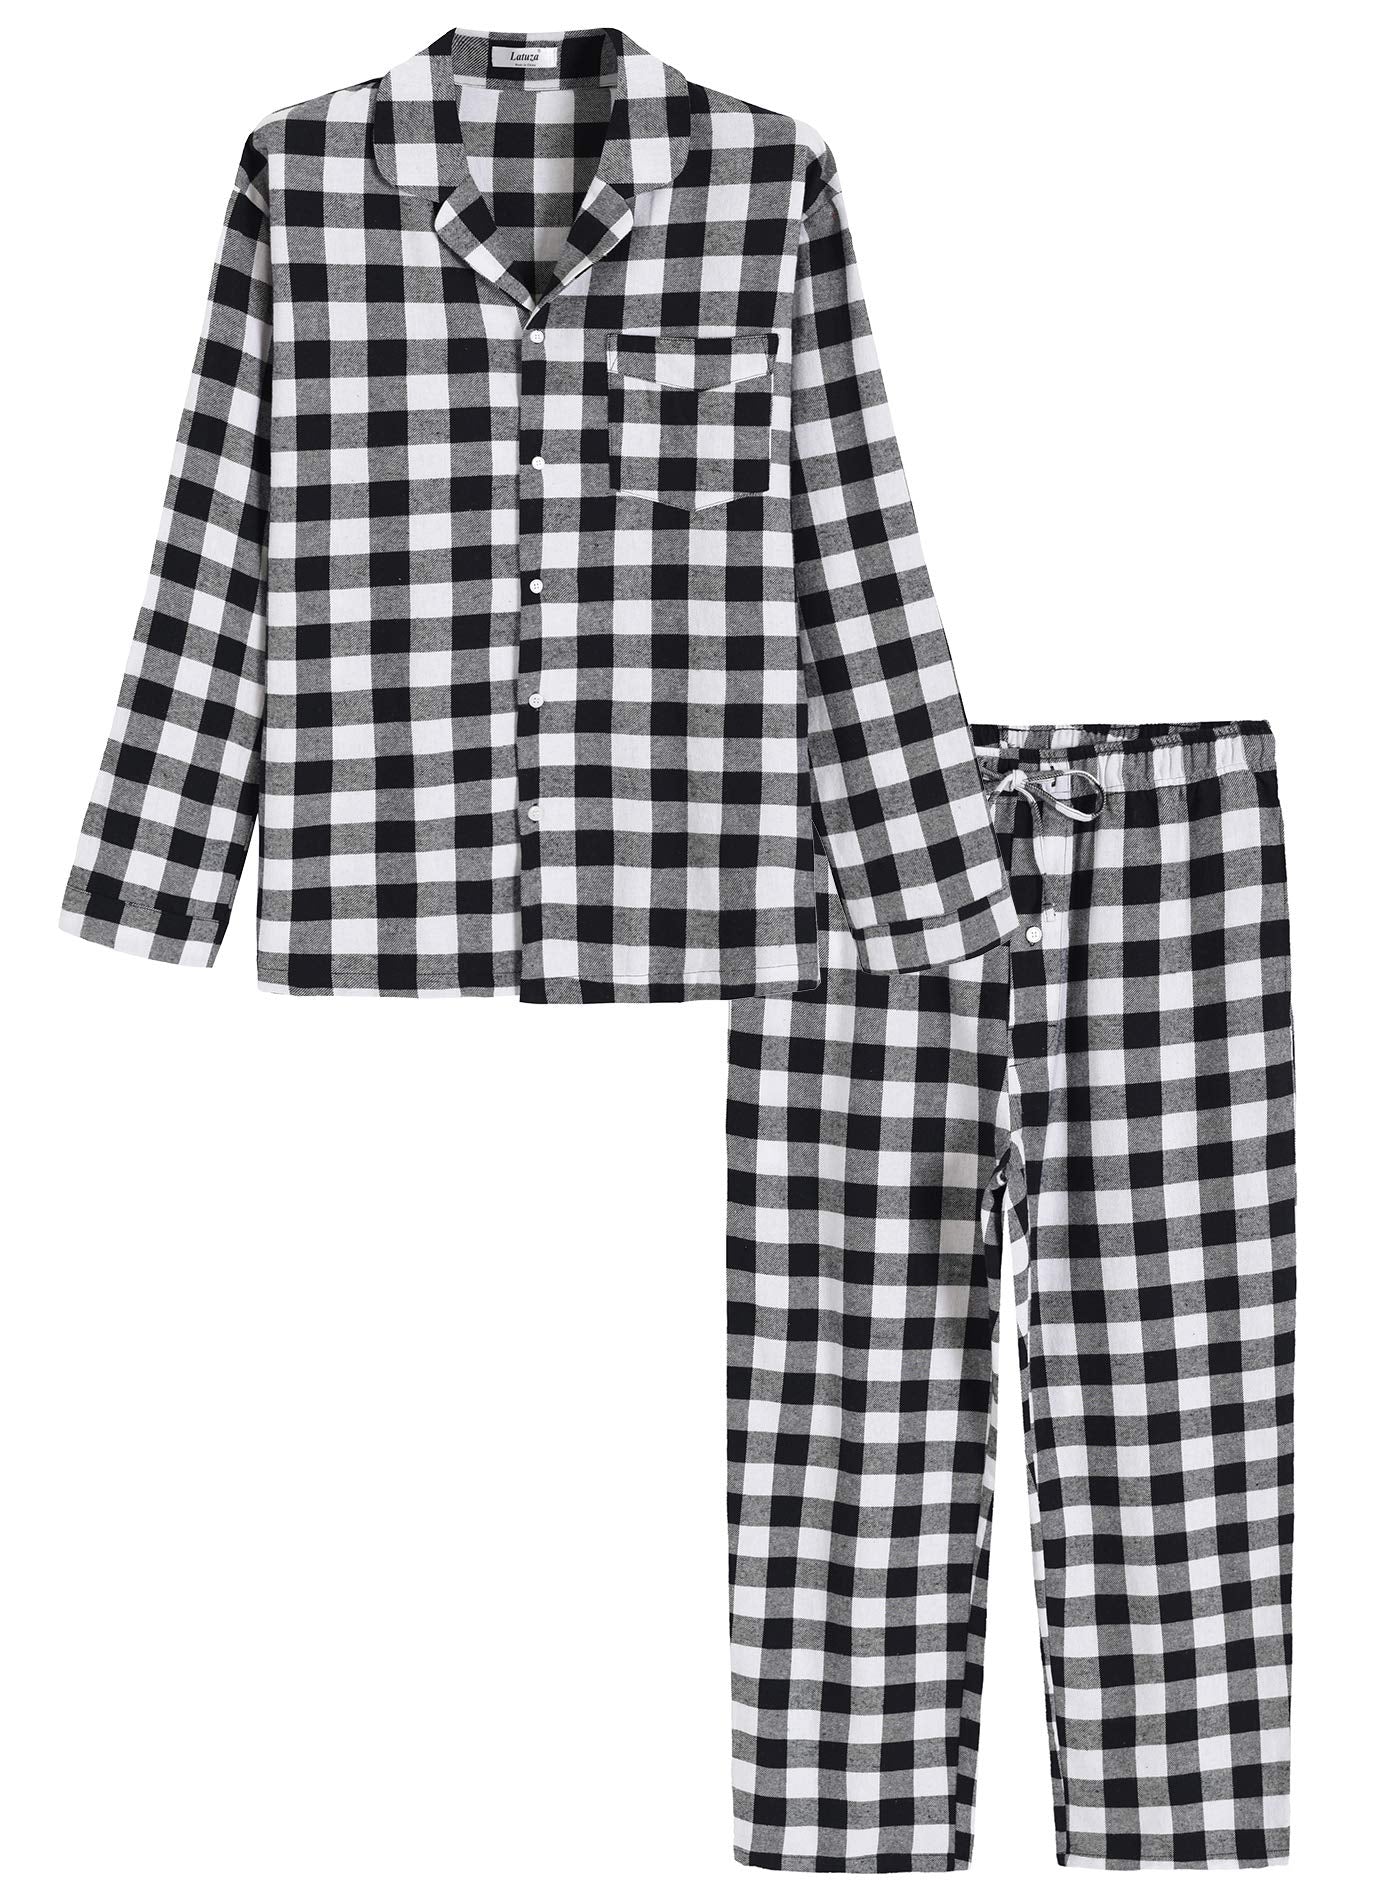 Men’s Cotton Pajama Set Plaid Woven Sleepwear